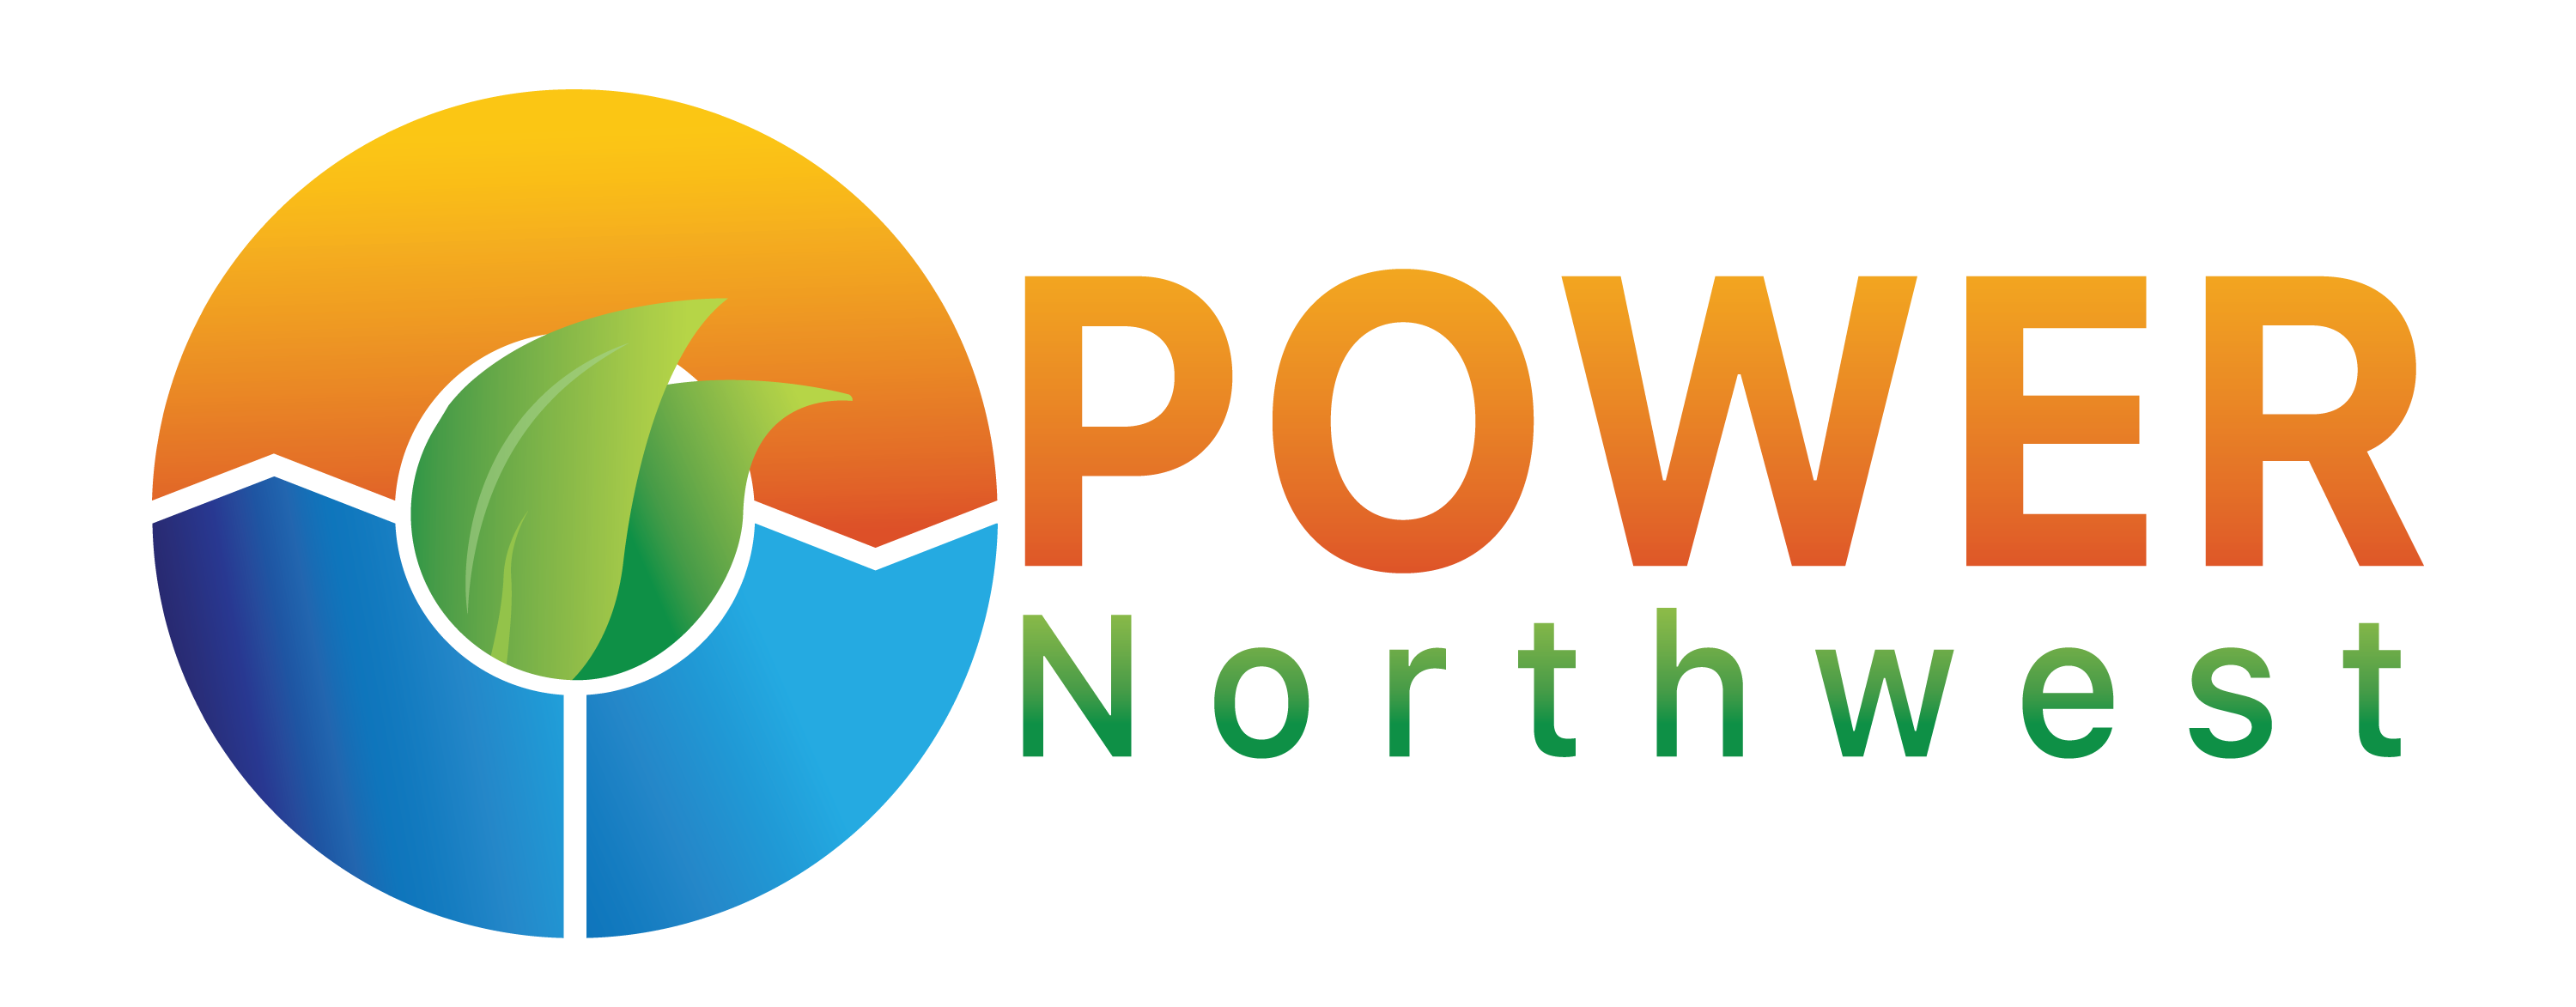 Power Northwest logo